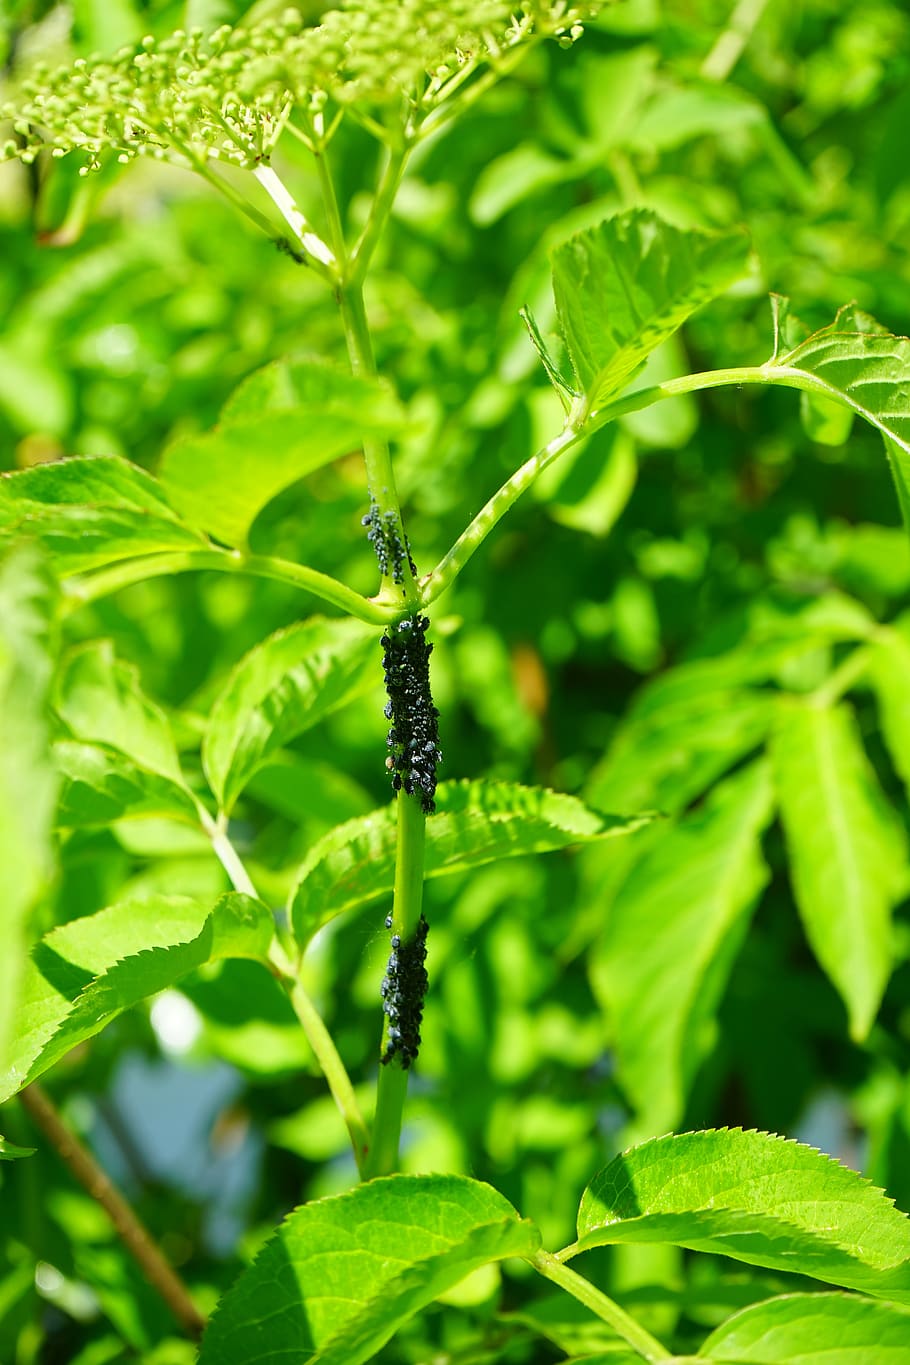 black elder aphids, lice, pests, infestation, vermin, aphis sambuci